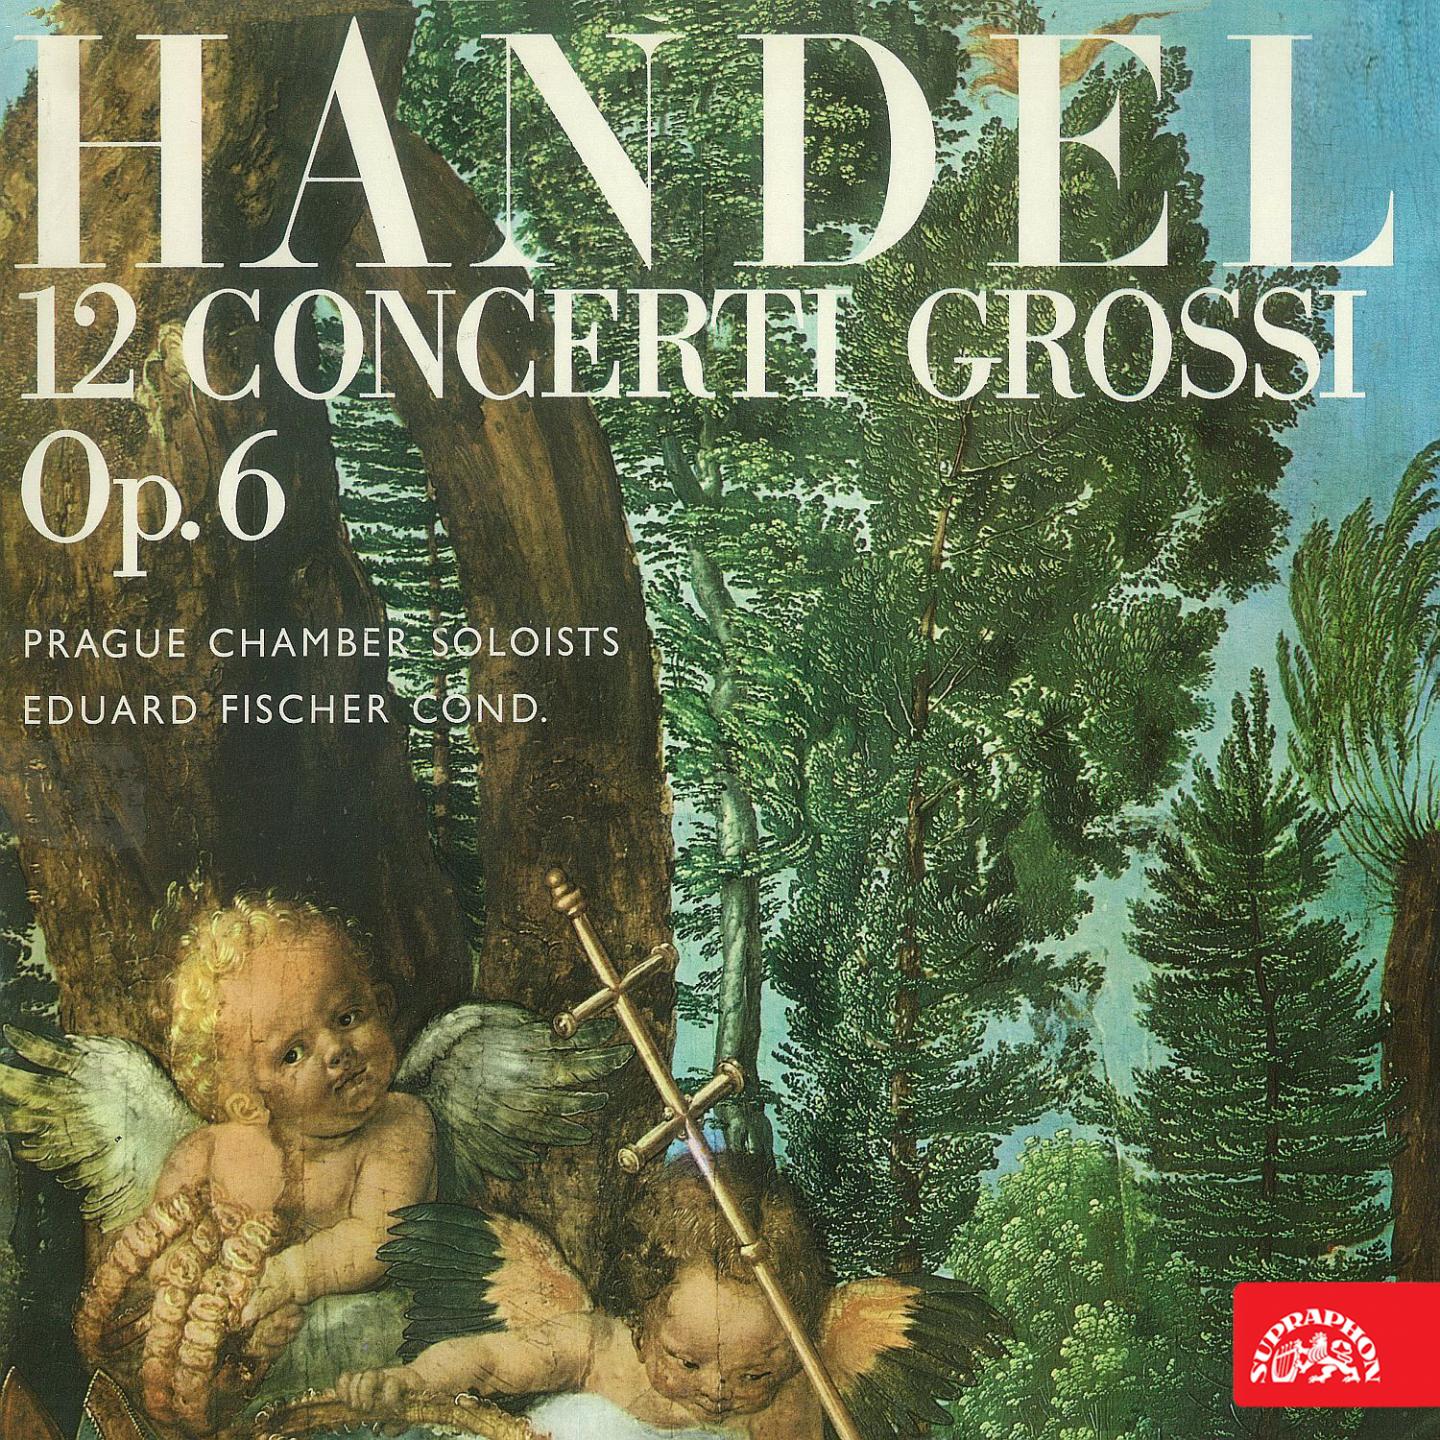 12 Concerti grossi, Op. 6, No. 8 in C Minor, HWV 326: IV. Adagio